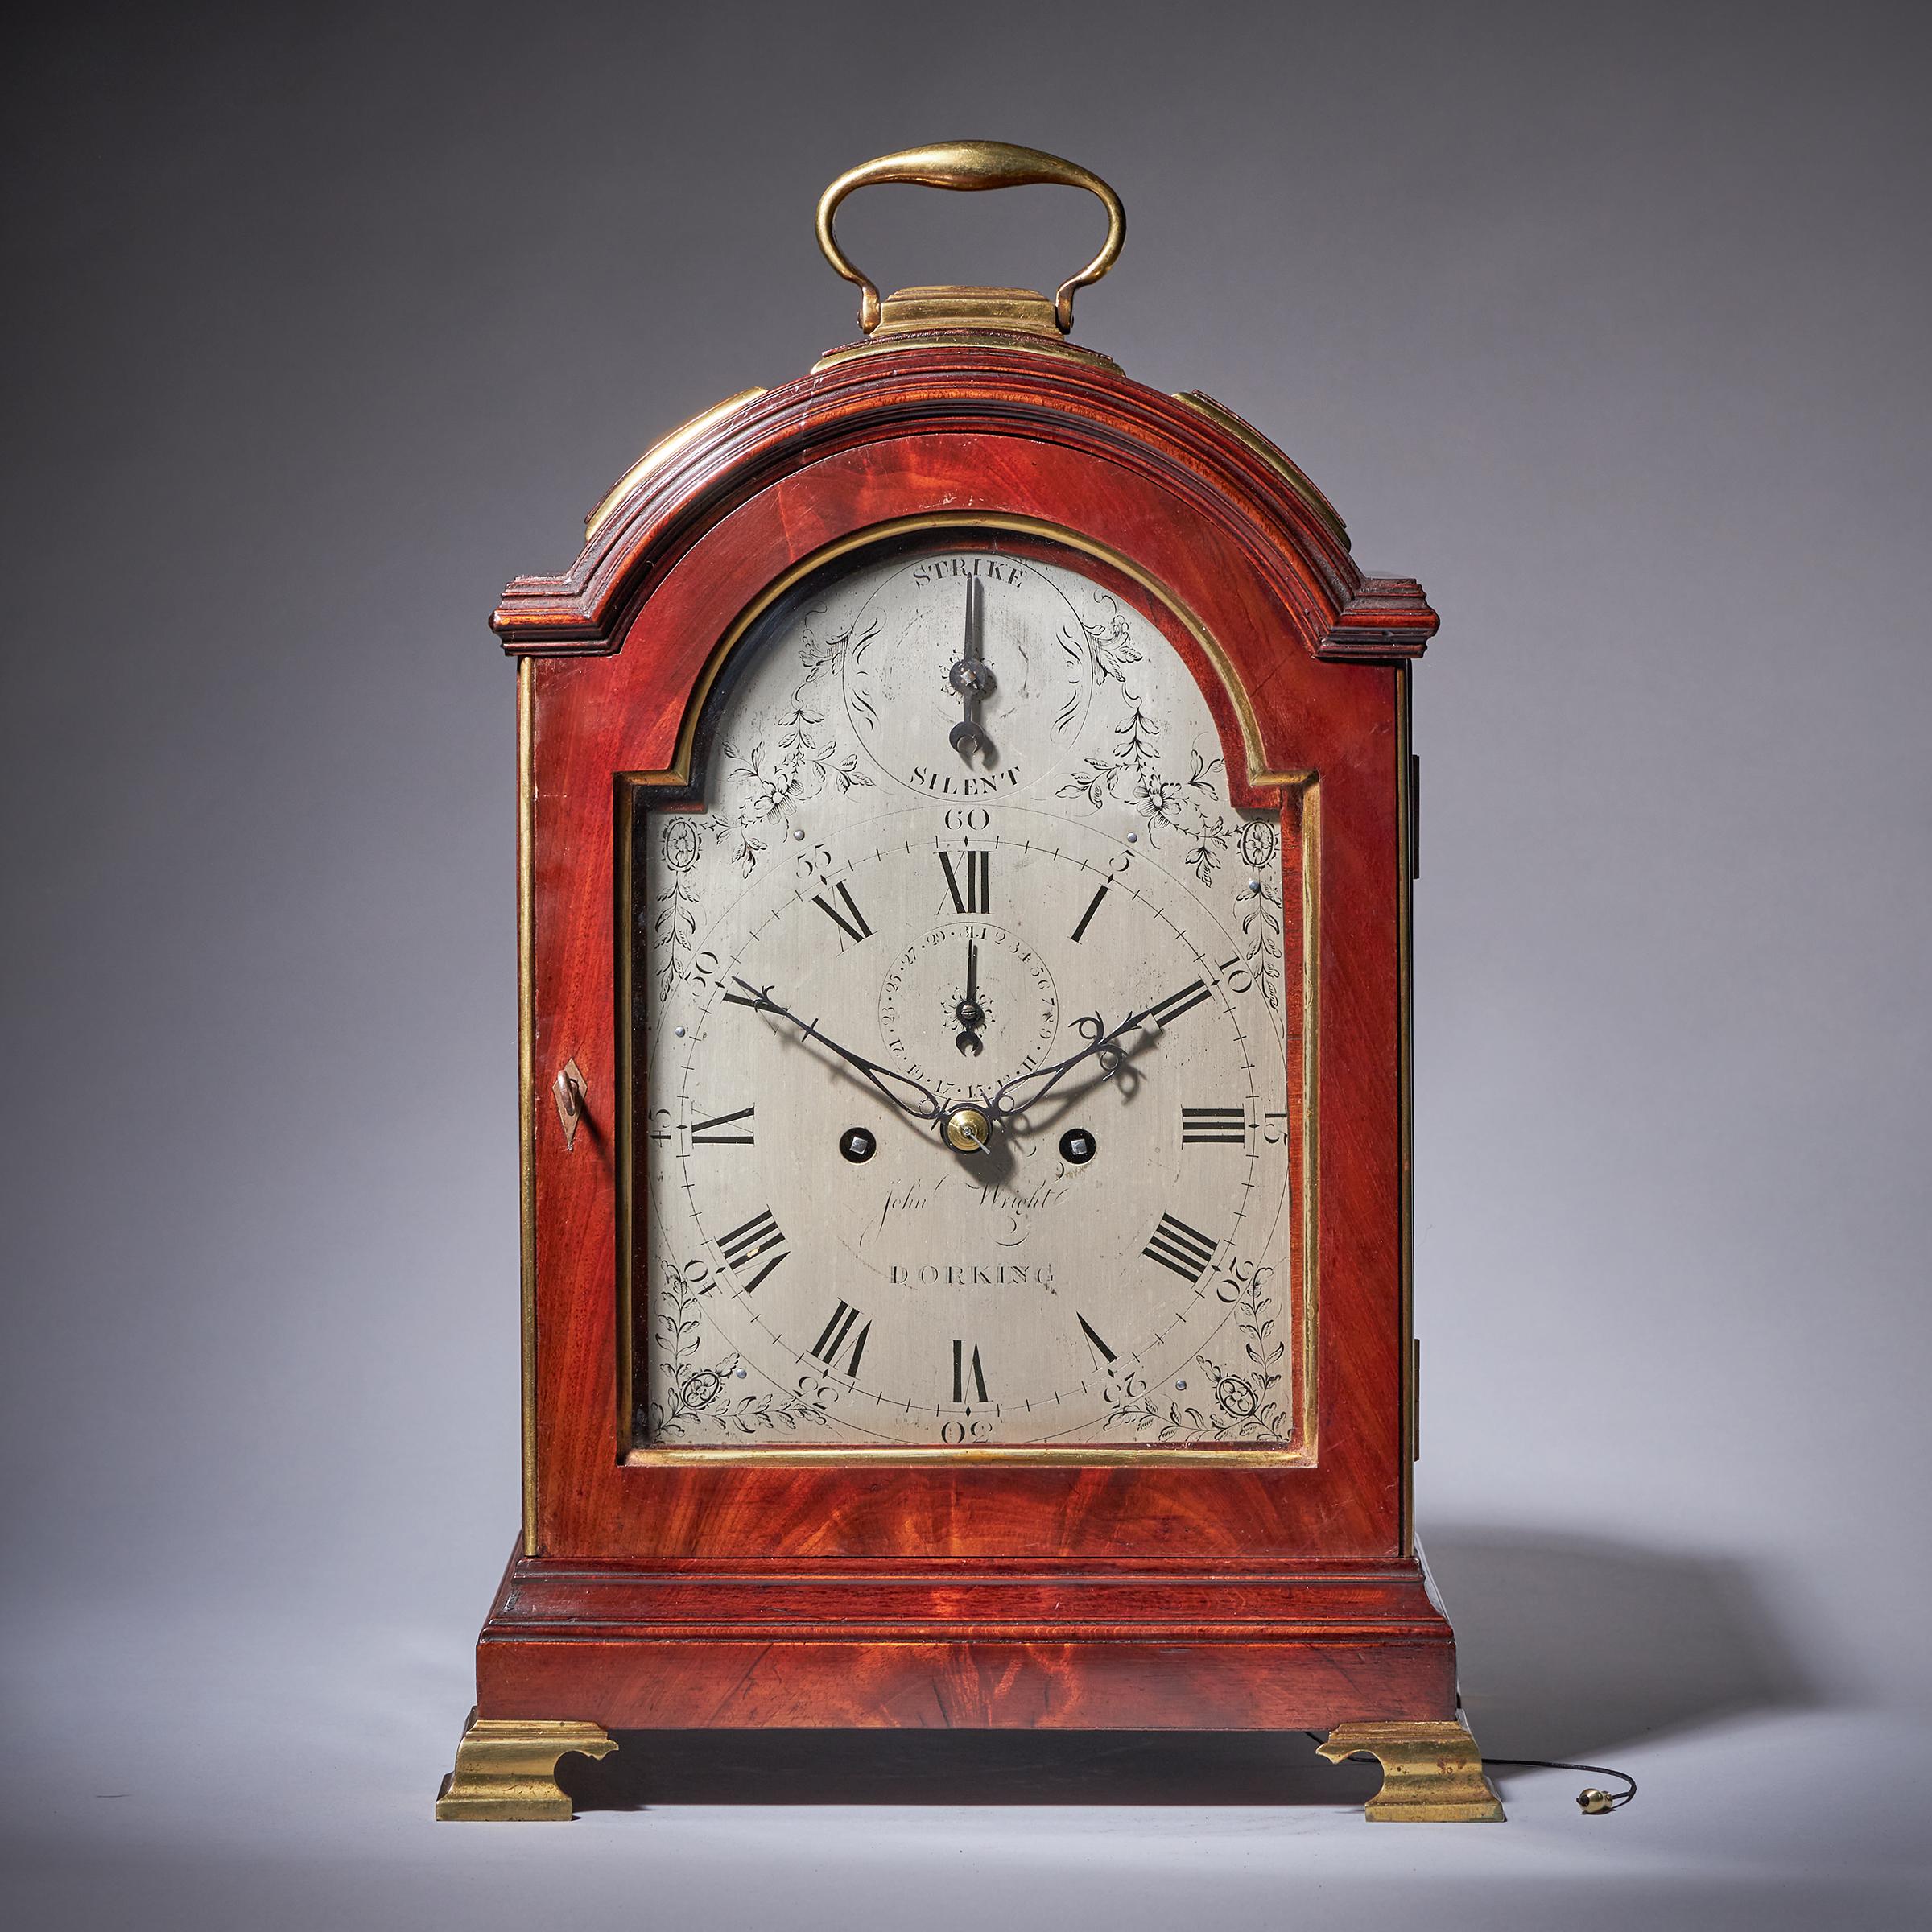 18th century George III figured mahogany three pad bracket clock by John Wright Dorking, Circa 1780. England
 
A most attractive English bracket clock, made around 1780, signed on the silvered dial John Wright Dorking. The mahogany veneered oak